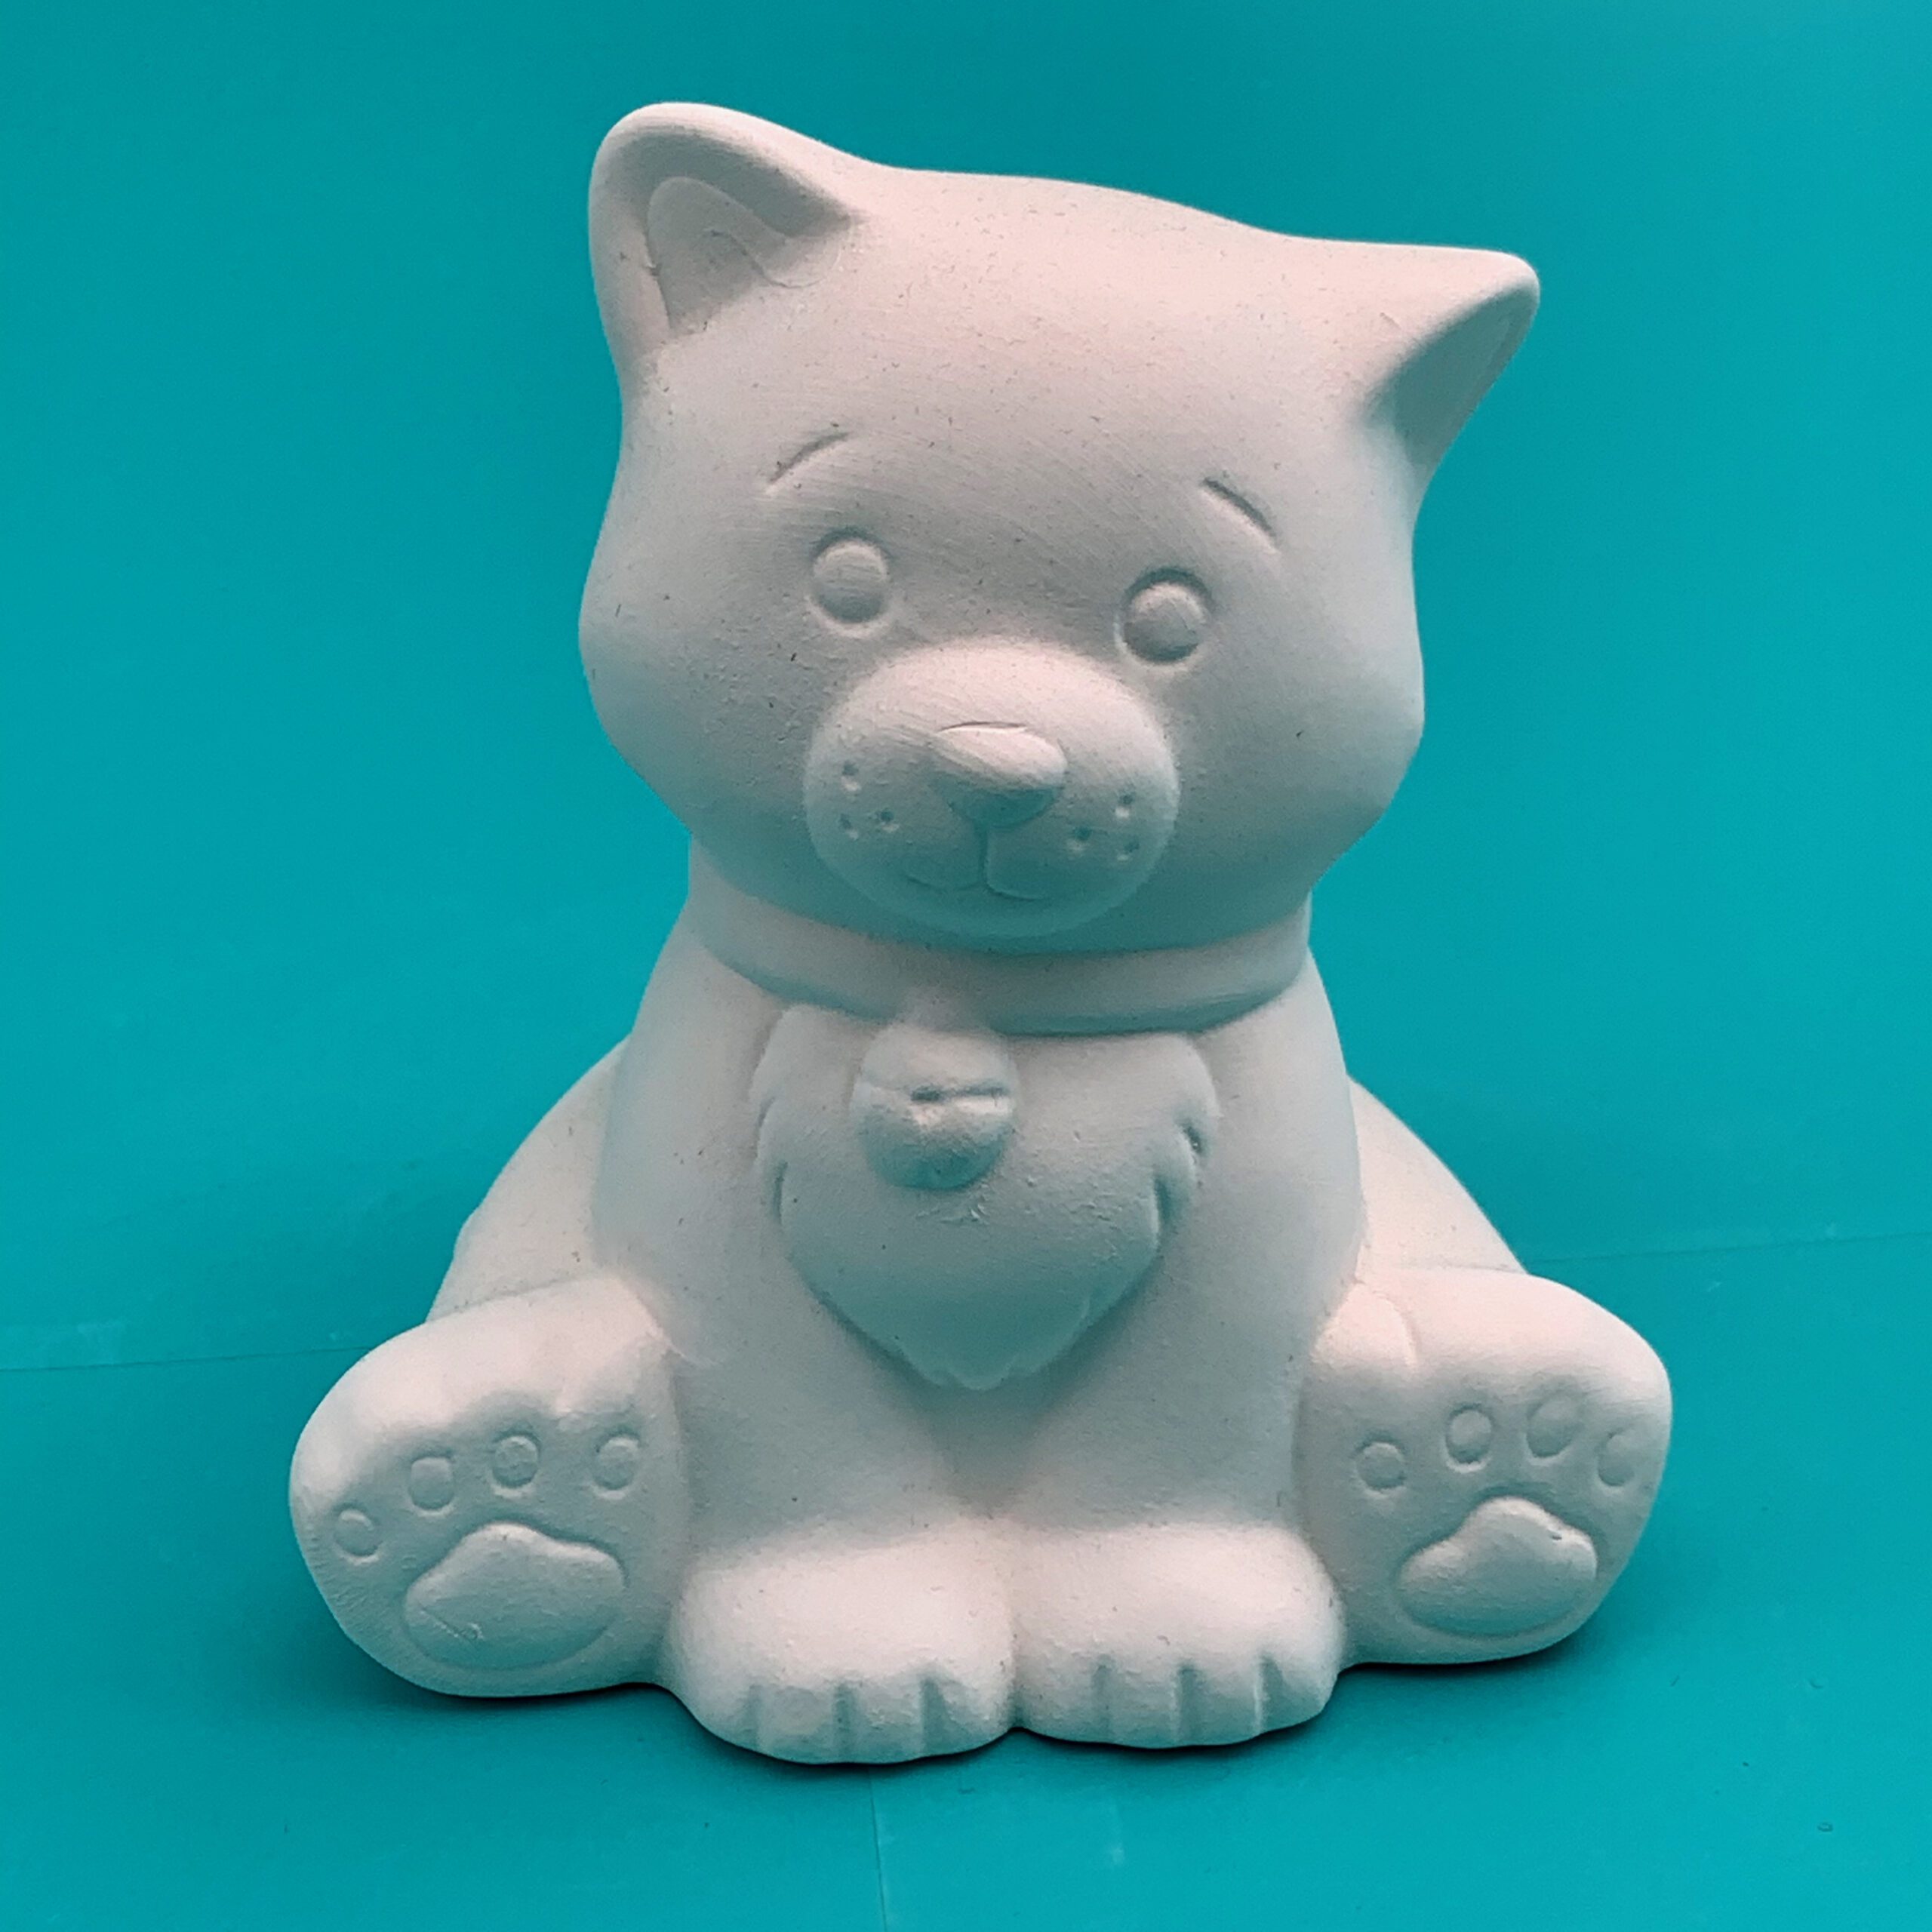 Create Art Studio Pottery Painting Ceramics kits to go Little Kitty Cat Ceramic Sculpture